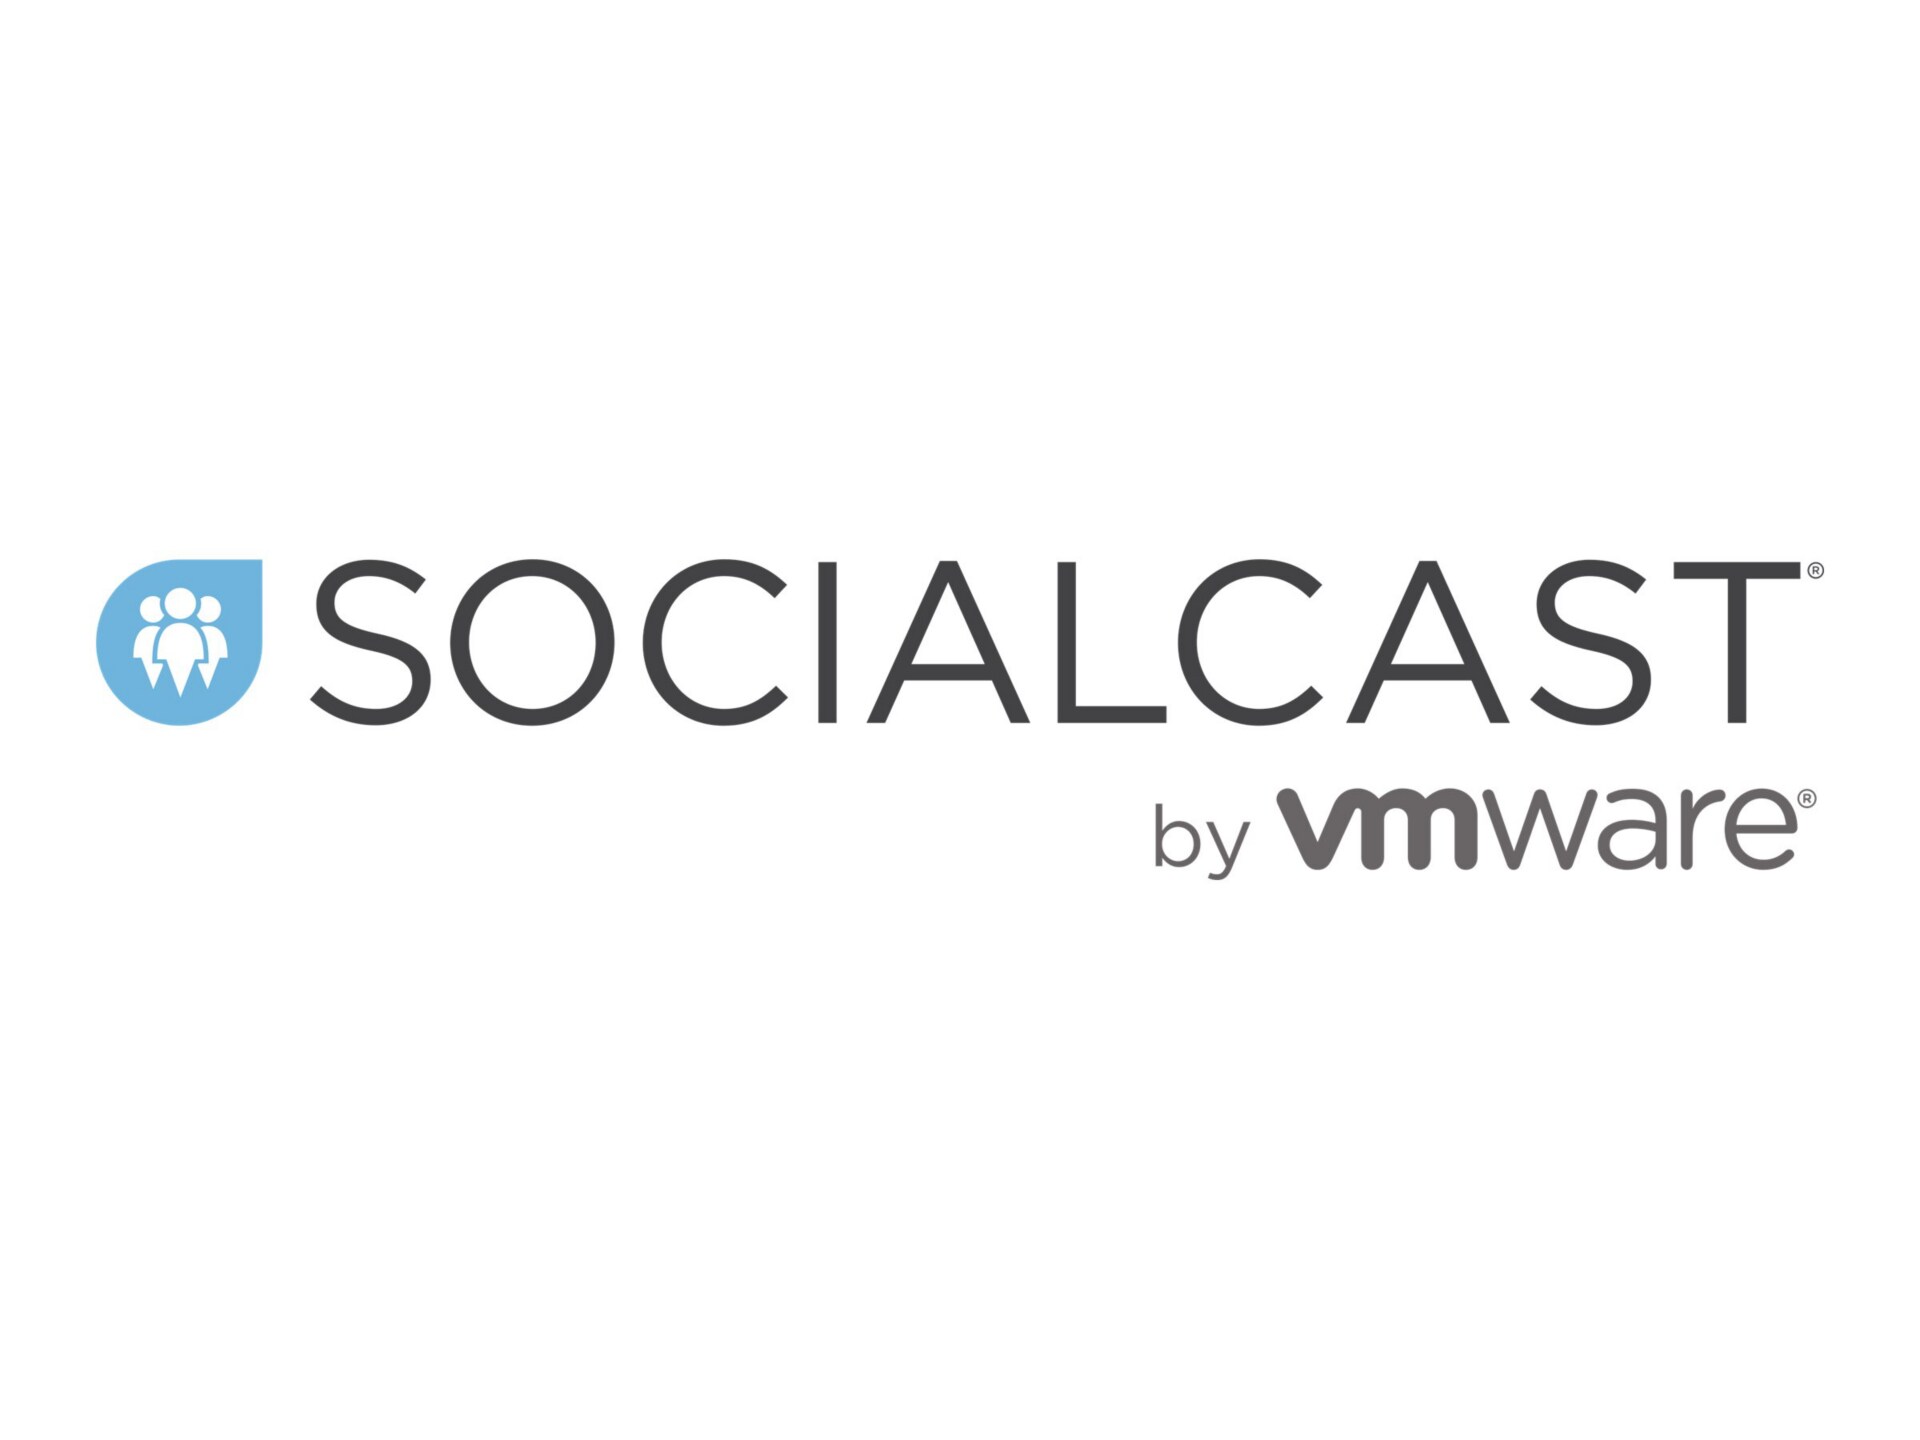 Socialcast On Premise platform - subscription license (1 year) + 1 Year VMw